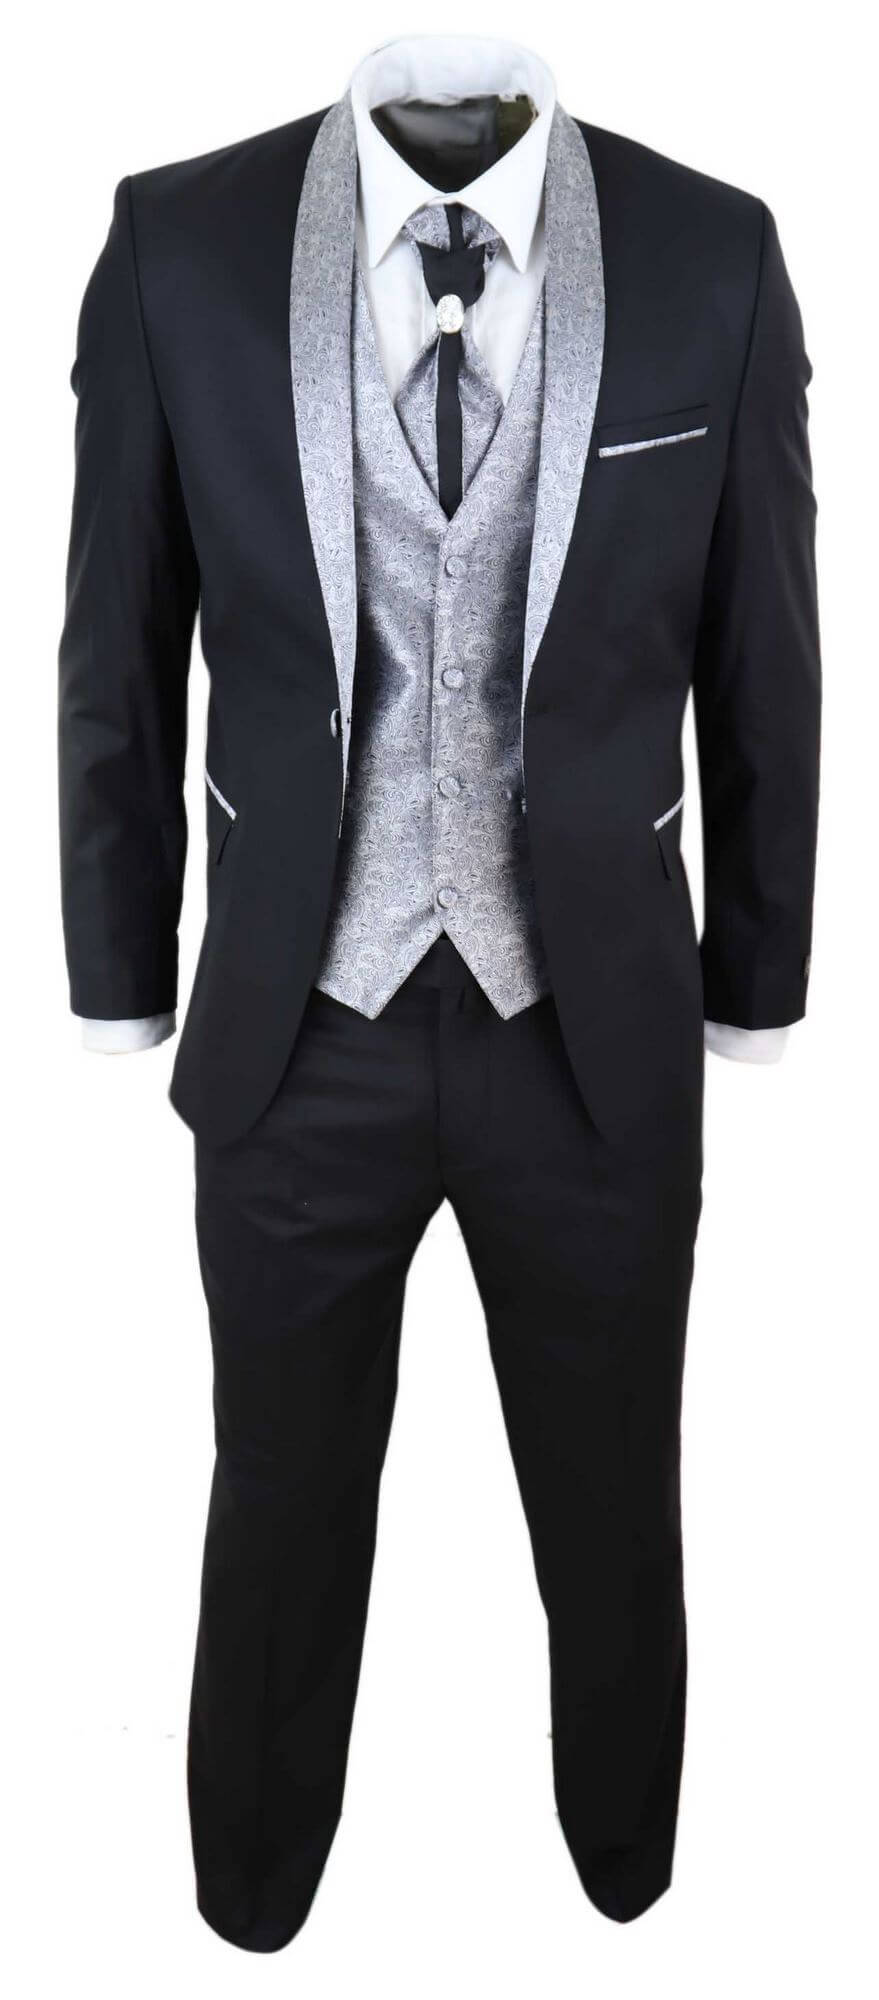 Van Heusen Wedding Suits, Men Brown Solid Slim Fit Wedding Four Piece Suit  for Suits at Vanheusenindia.abfrl.in